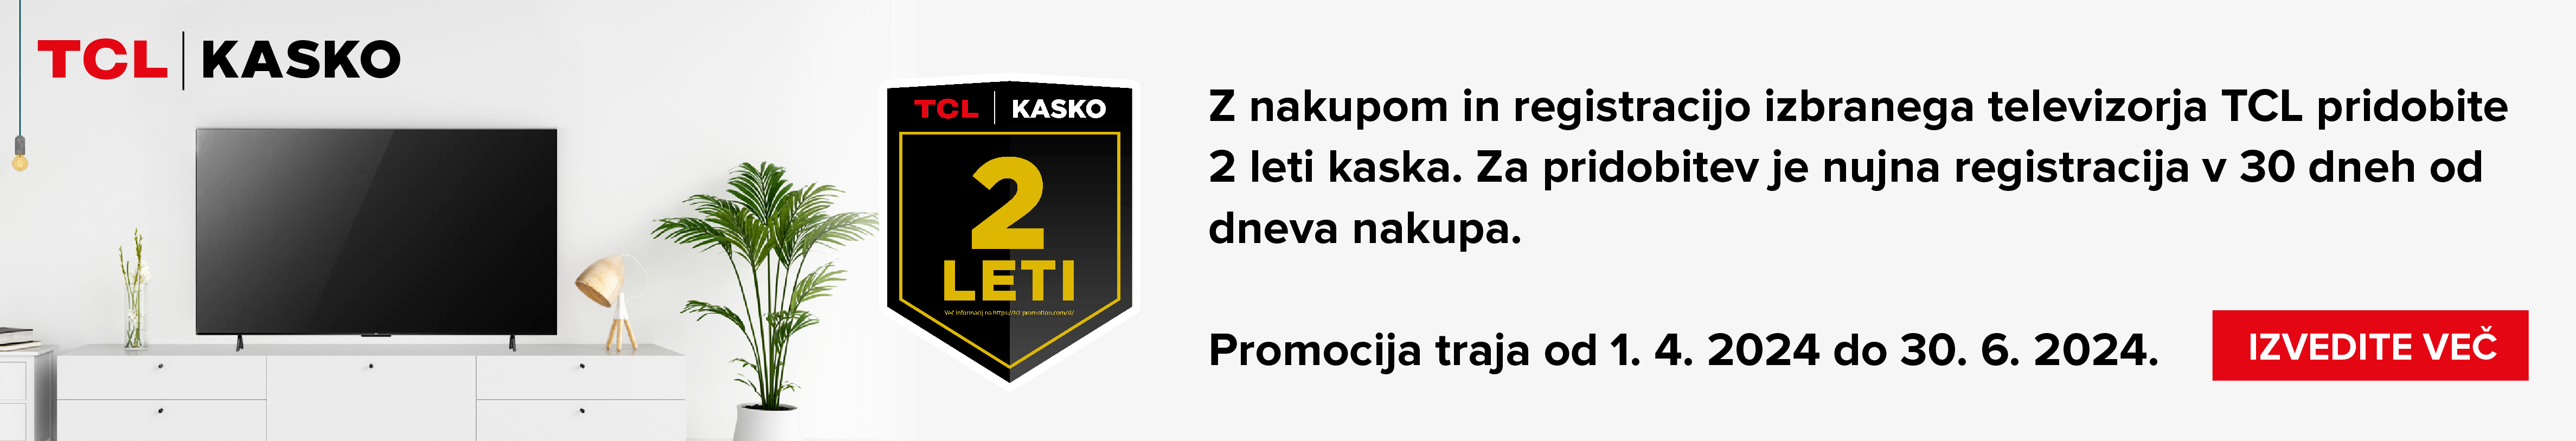 Banner_TCL Kasko